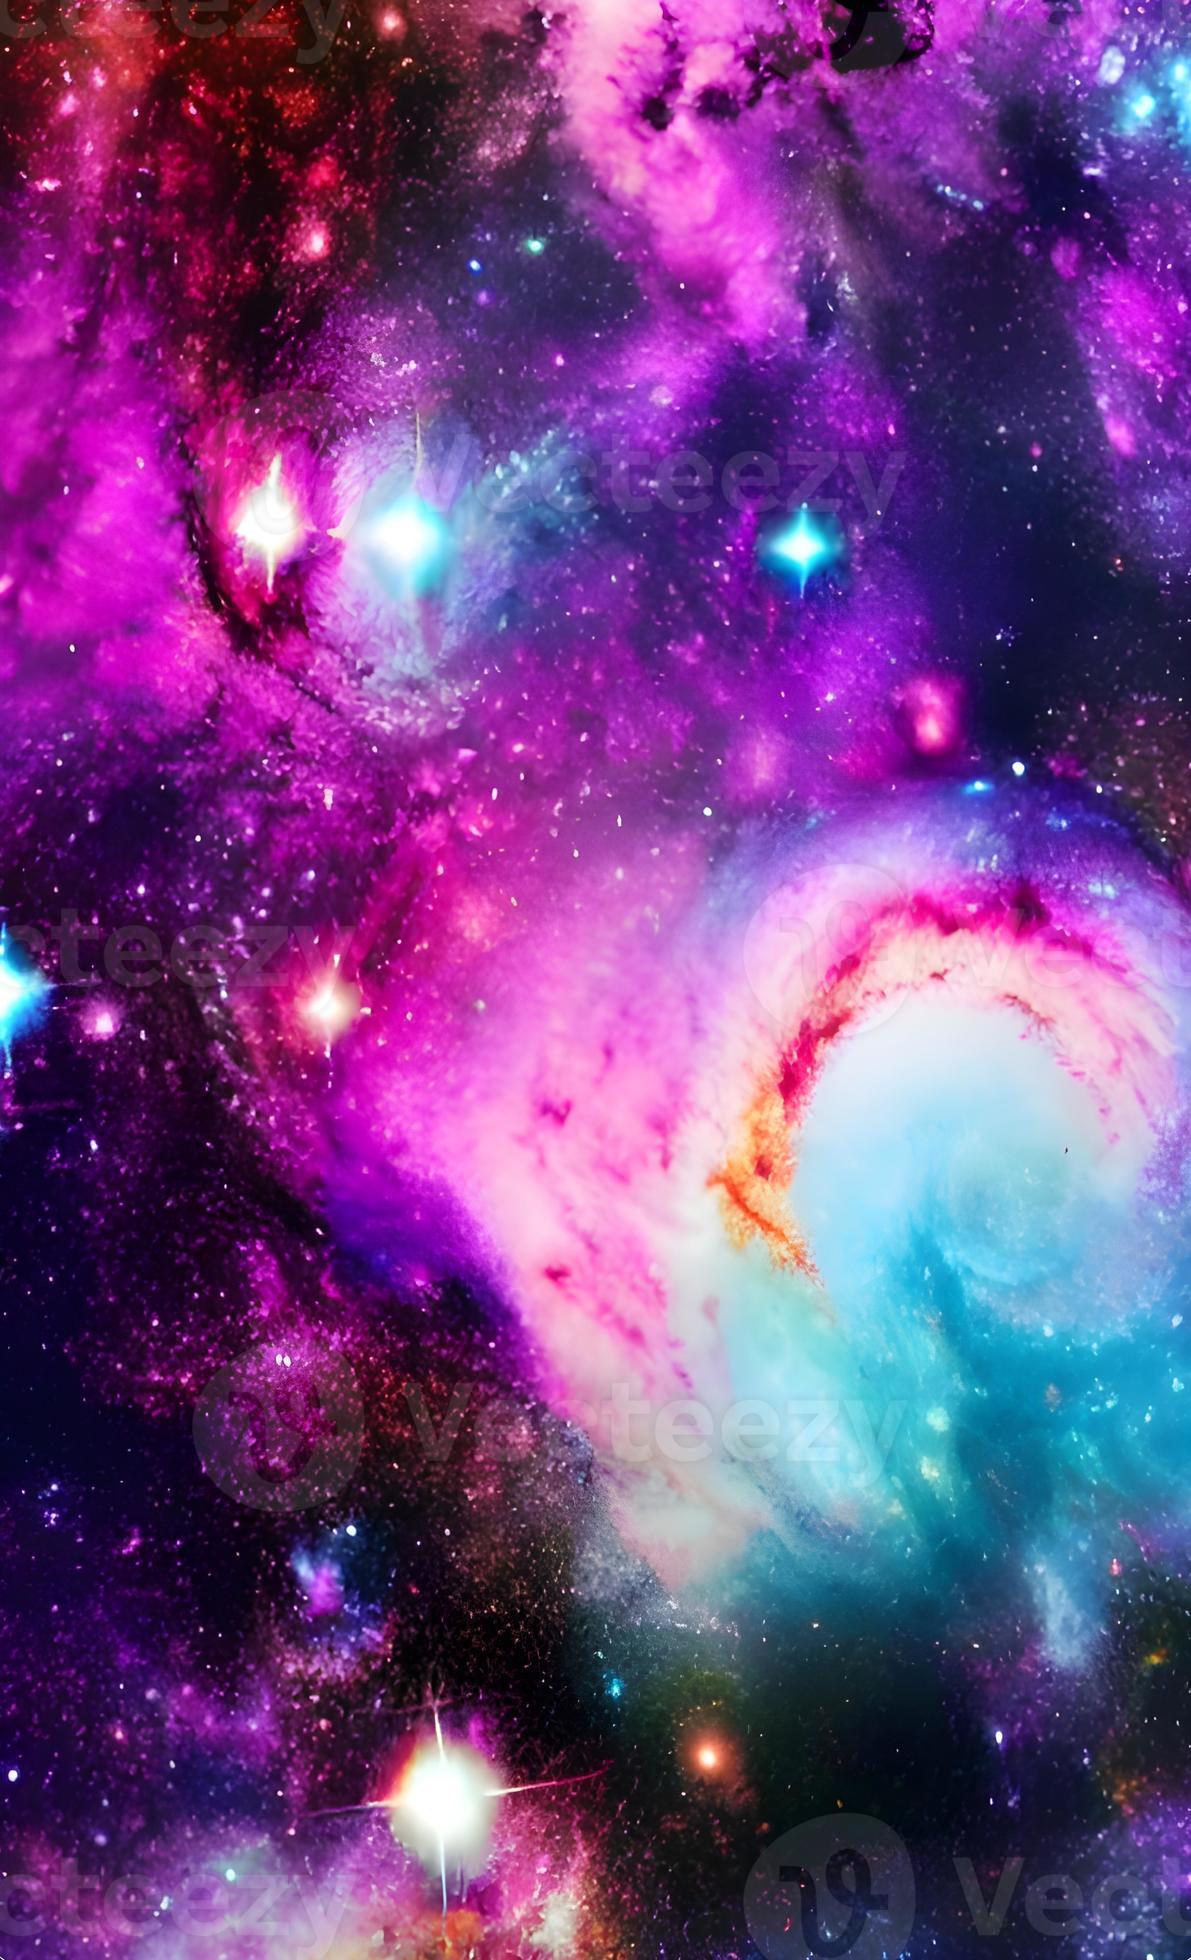 Galaxy Space background universe magic sky nebula night purple cosmos.  Cosmic galaxy wallpaper blue color star dust. Blue texture abstract galaxy  infinite future dark deep light 12199512 Stock Photo at Vecteezy